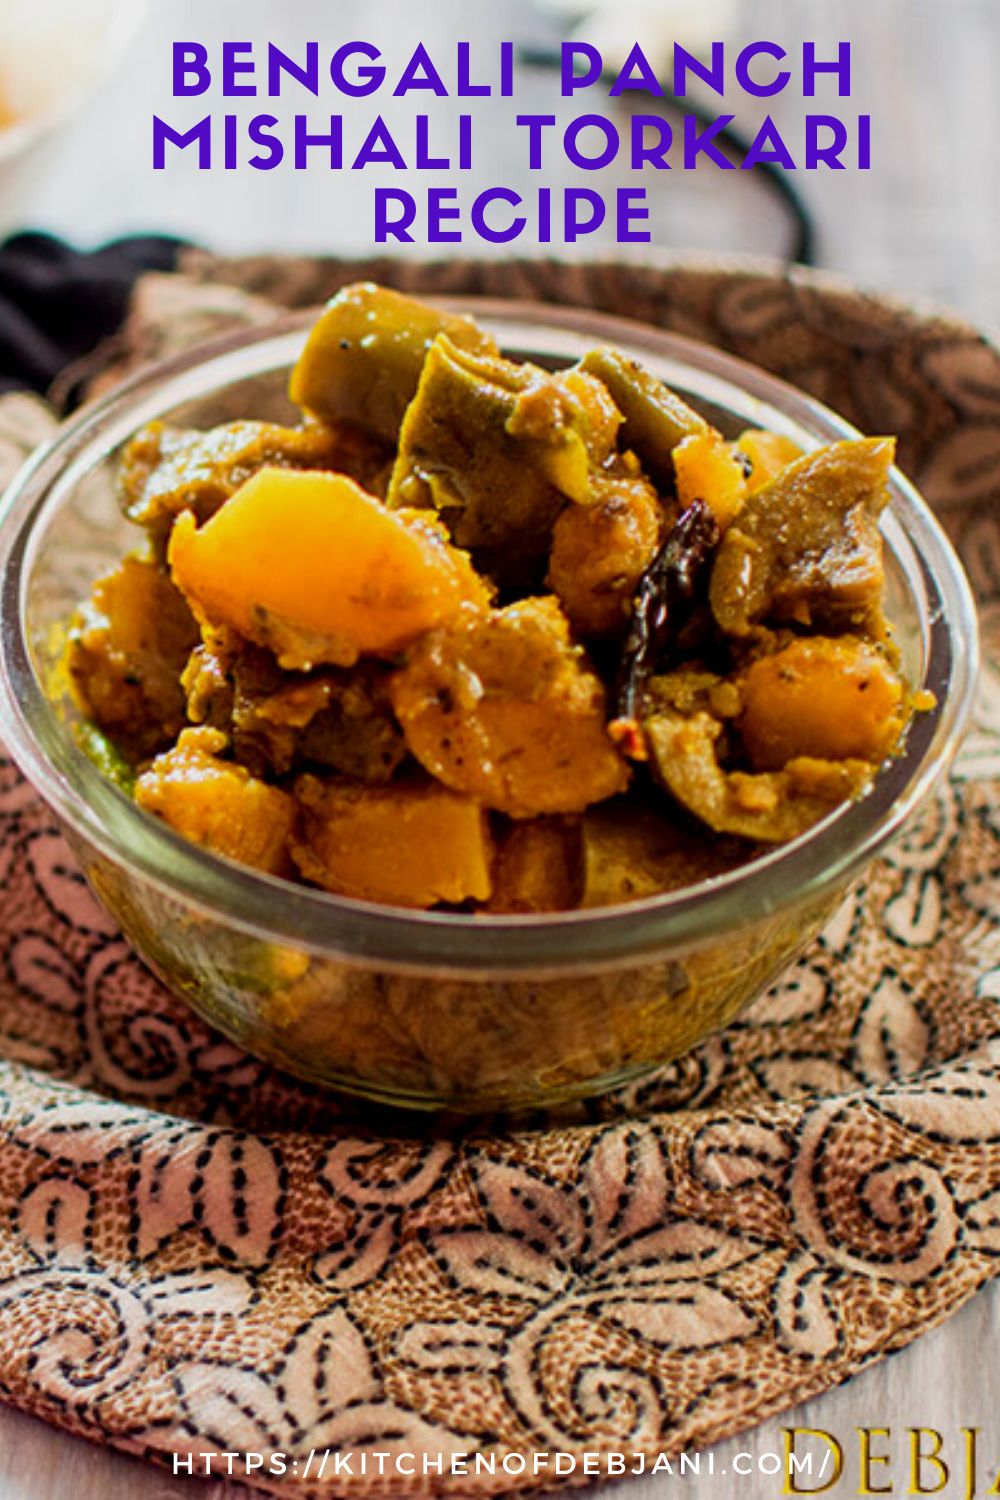 %Bengali Panch Mishali Torkari Recipe Photo Food Pinterest Pin